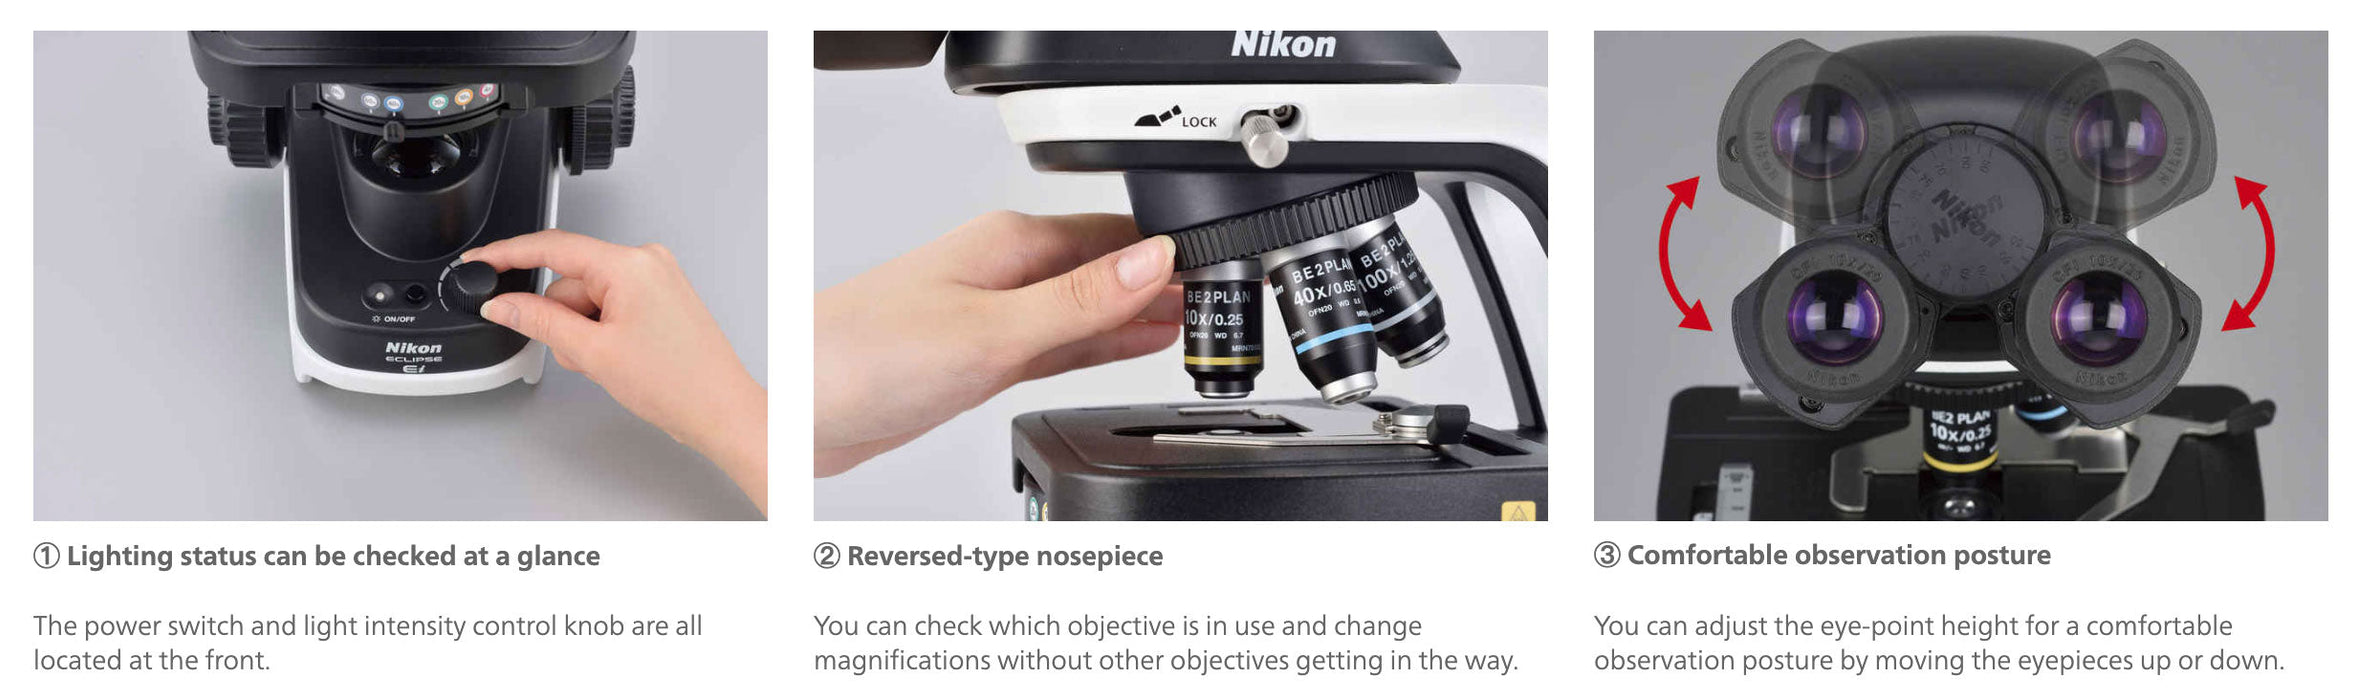 Nikon Eclipse Ei Trinocular Microscope